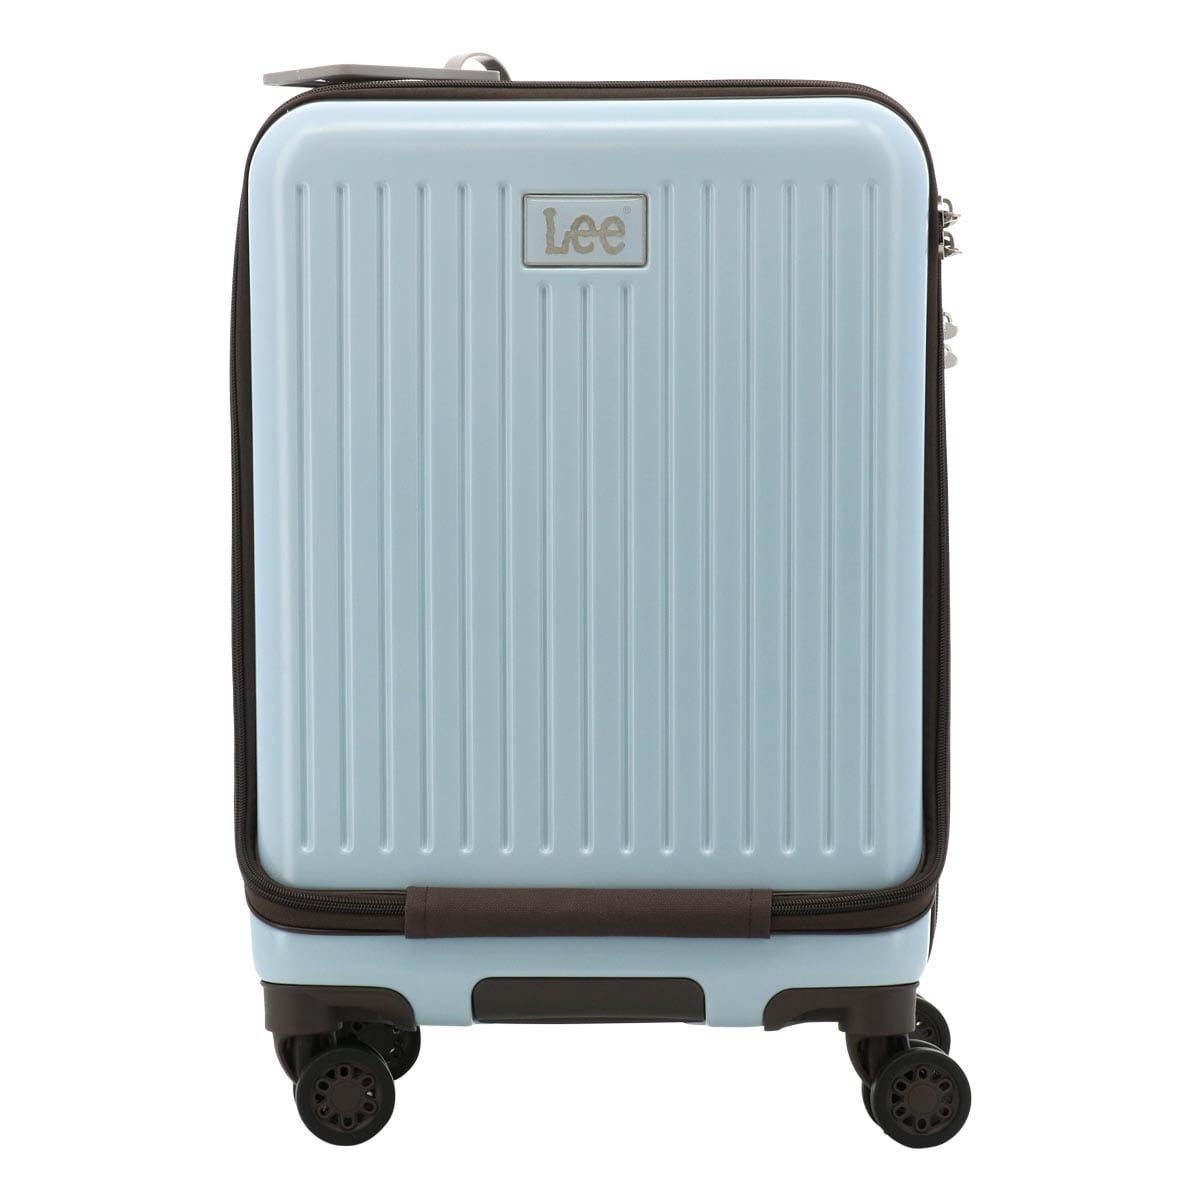 Lee スーツケース 37L 47cm 3kg フロントオープン リー 320-9020 19インチ journey TSAロック搭載 ハードキャリー